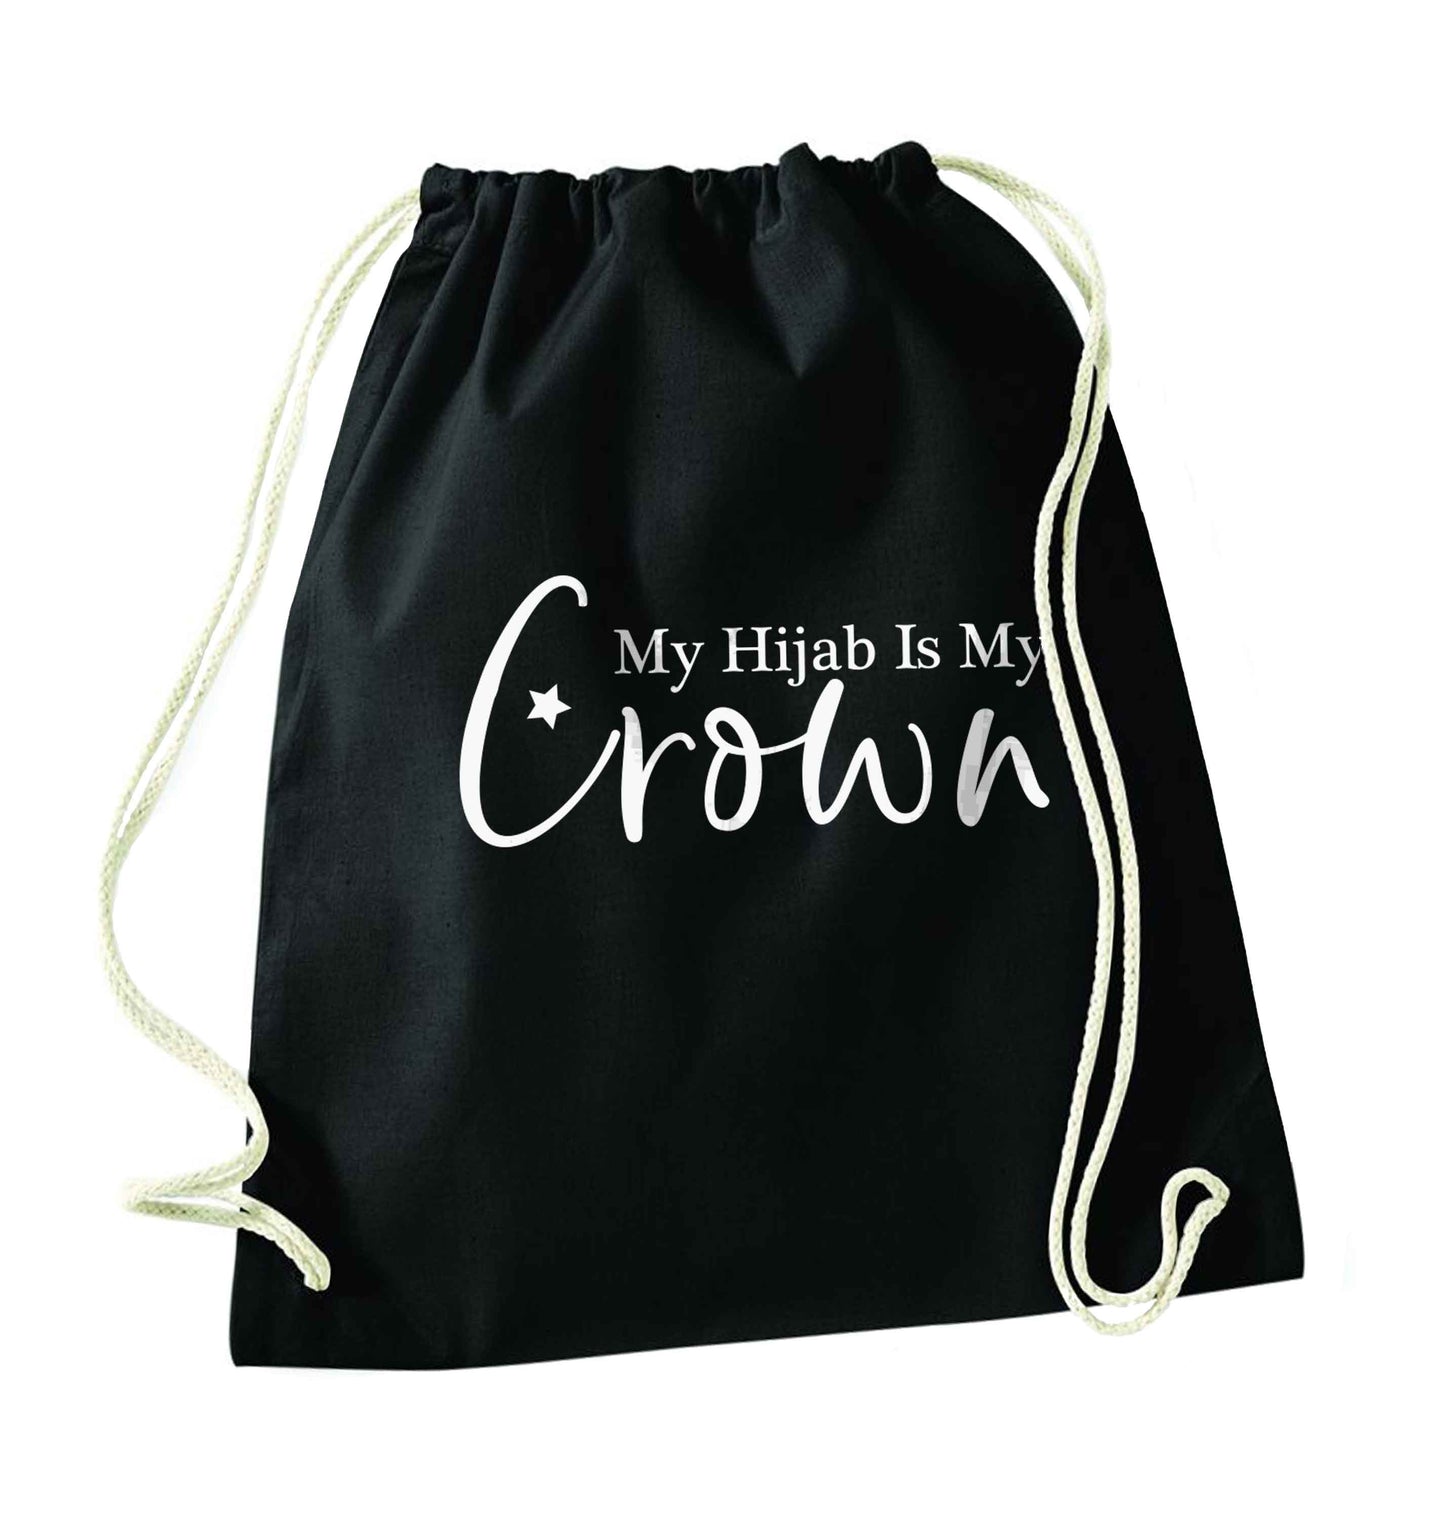 My hijab is my crown black drawstring bag